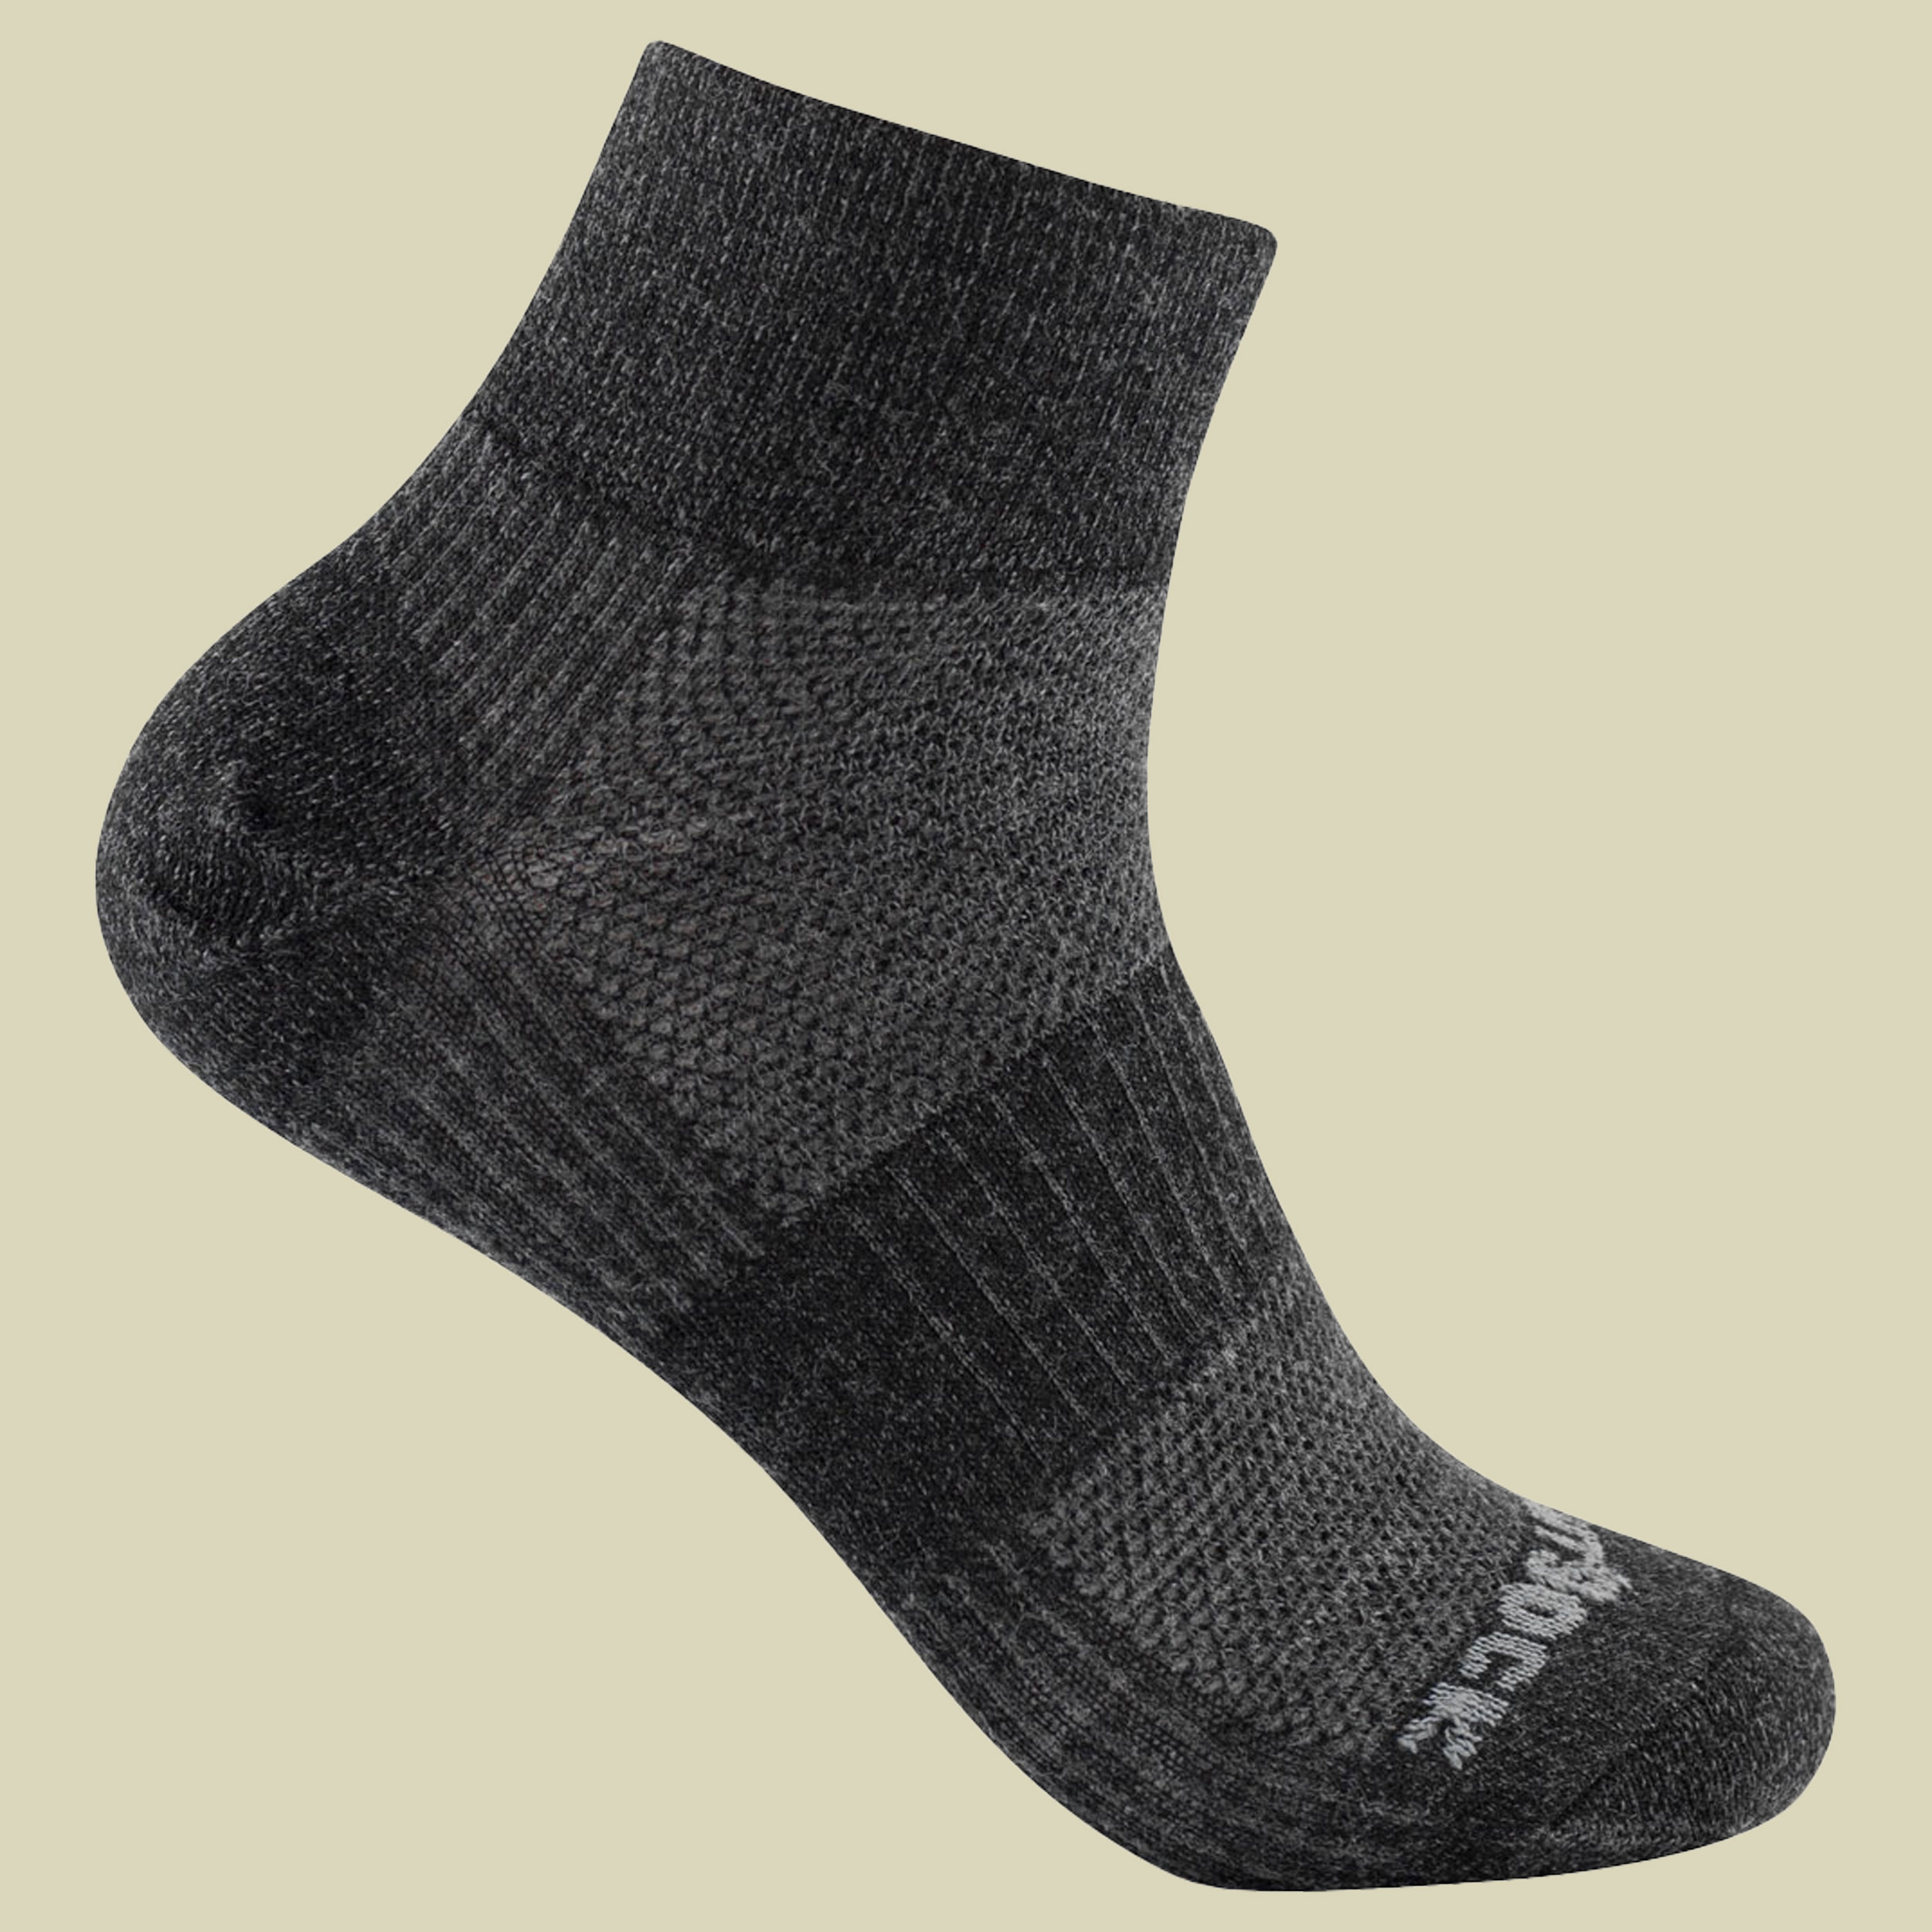 Merino Coolmesh II Quarter Größe 45,5-49 (XL) Farbe grey black matt